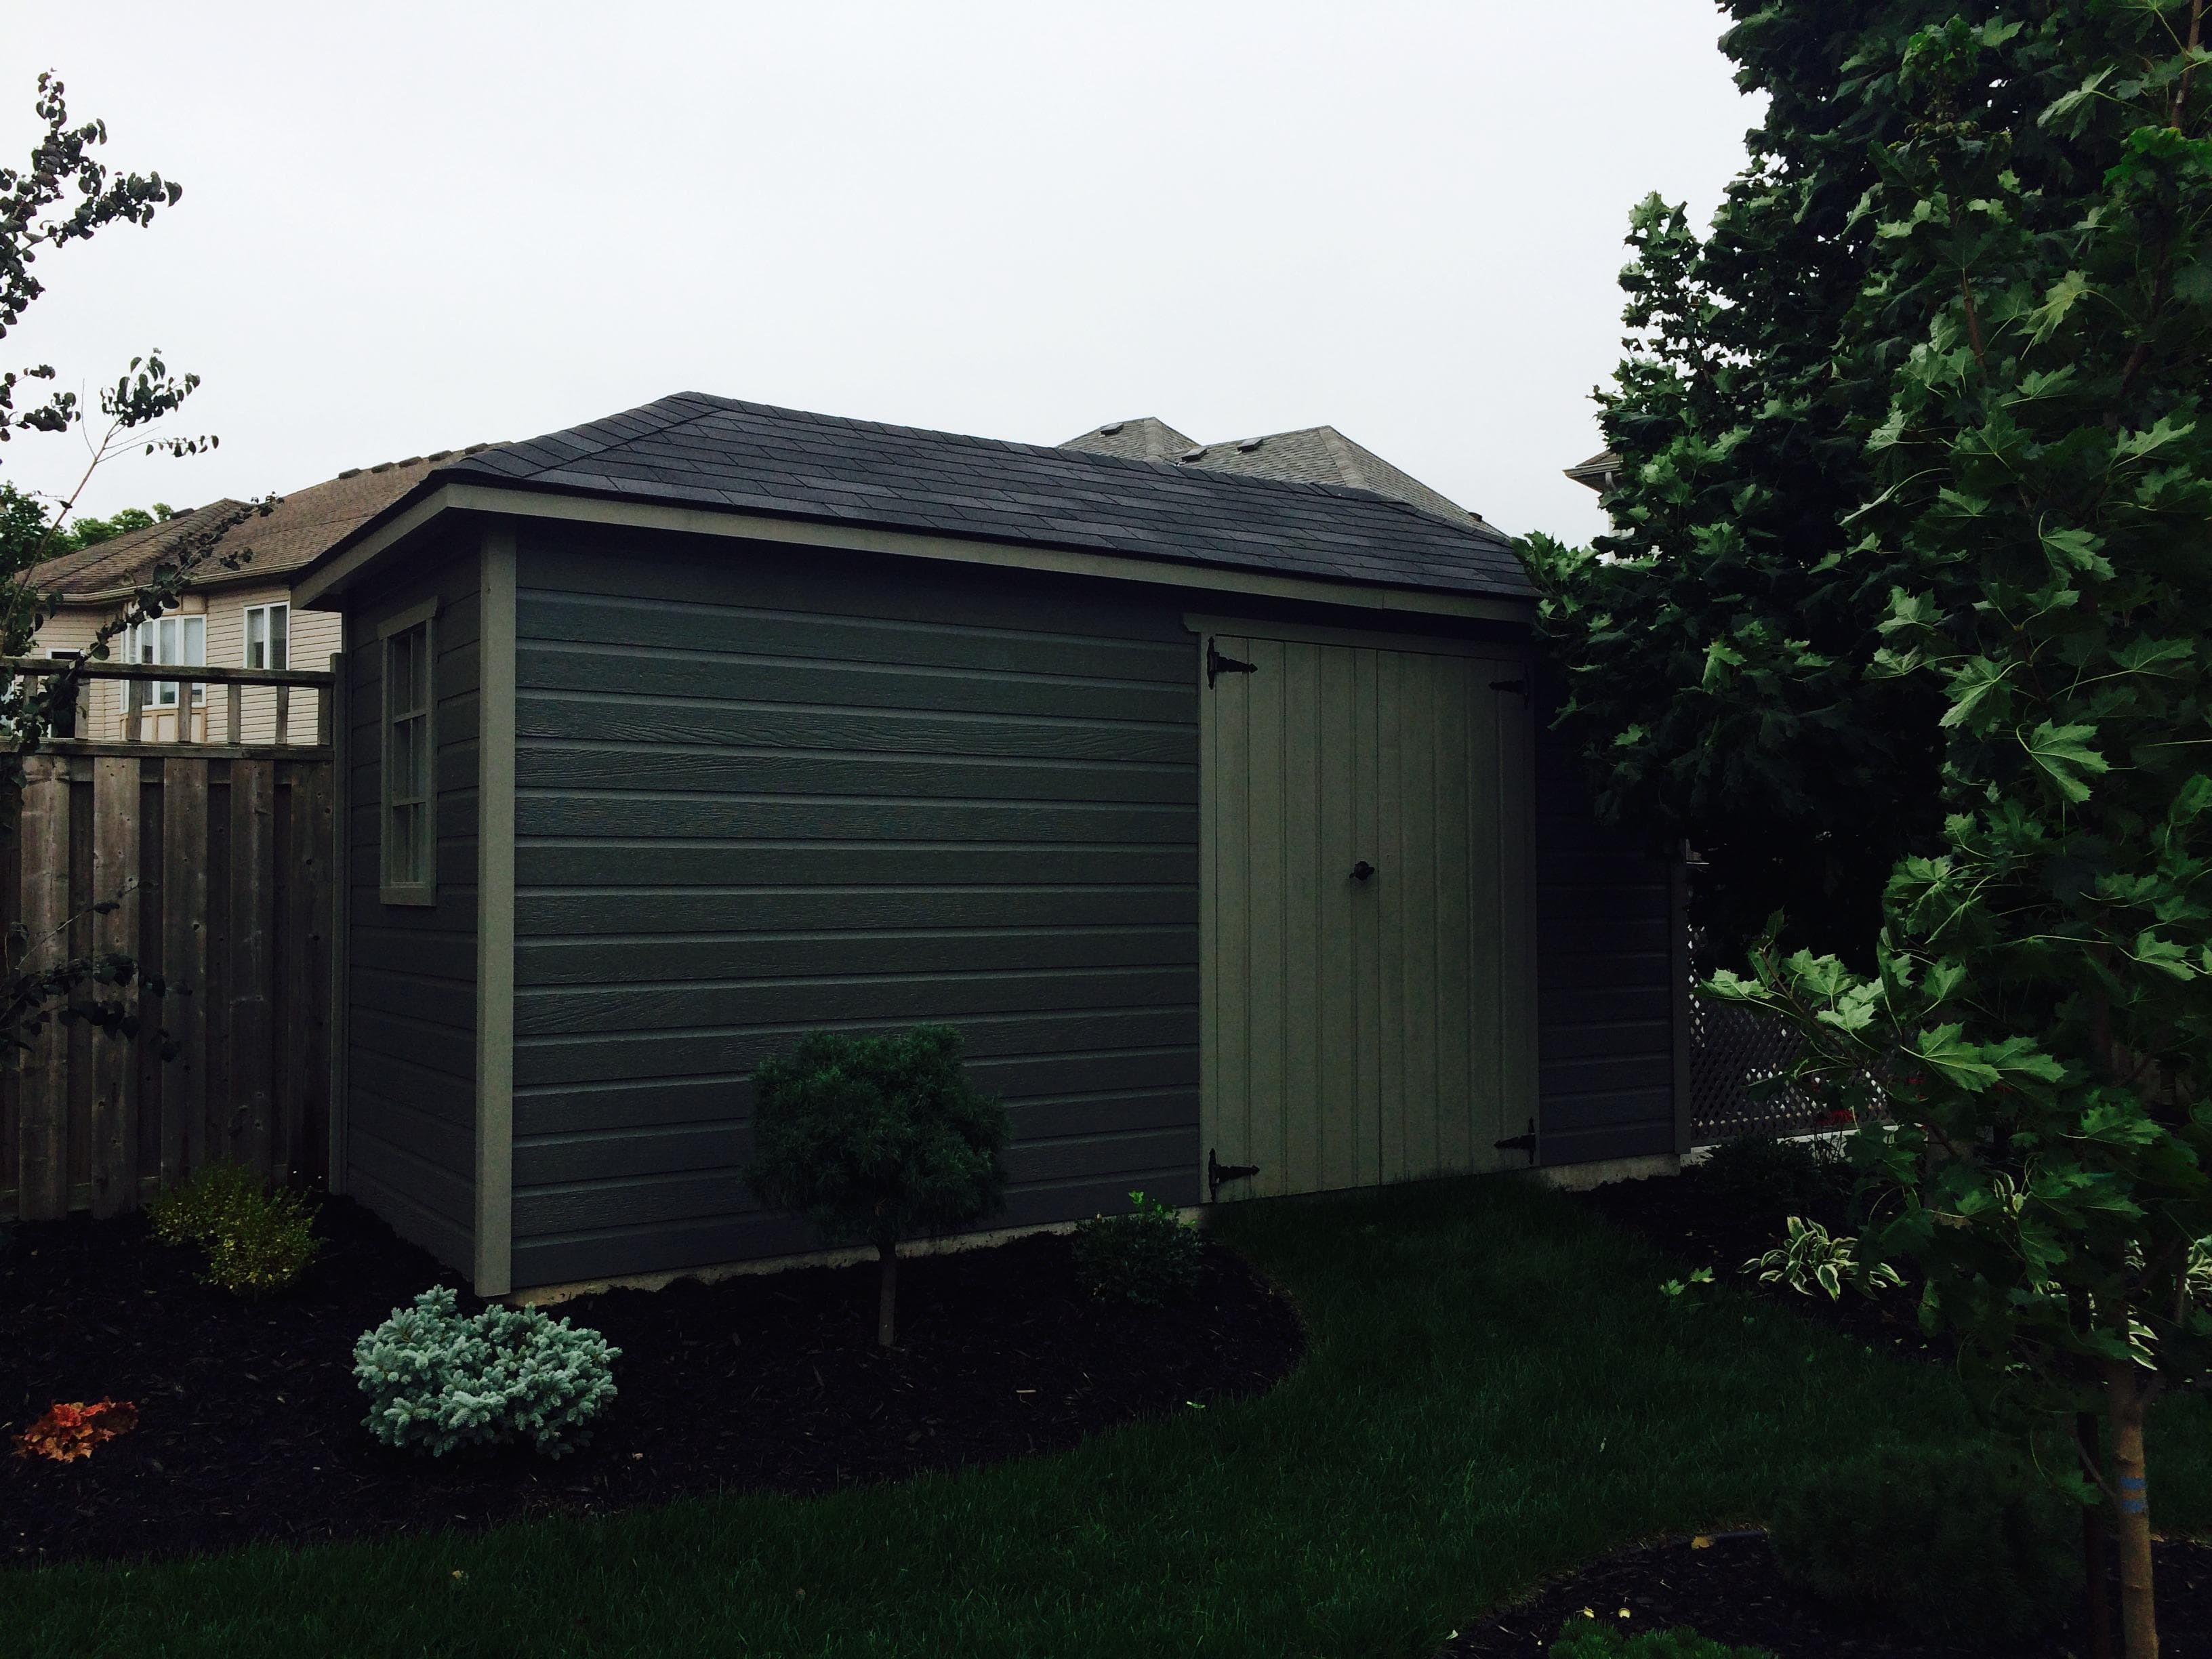 Sonoma 6x16 home studio with pane sidelite window in Kitchener Ontario. ID number 181378-5